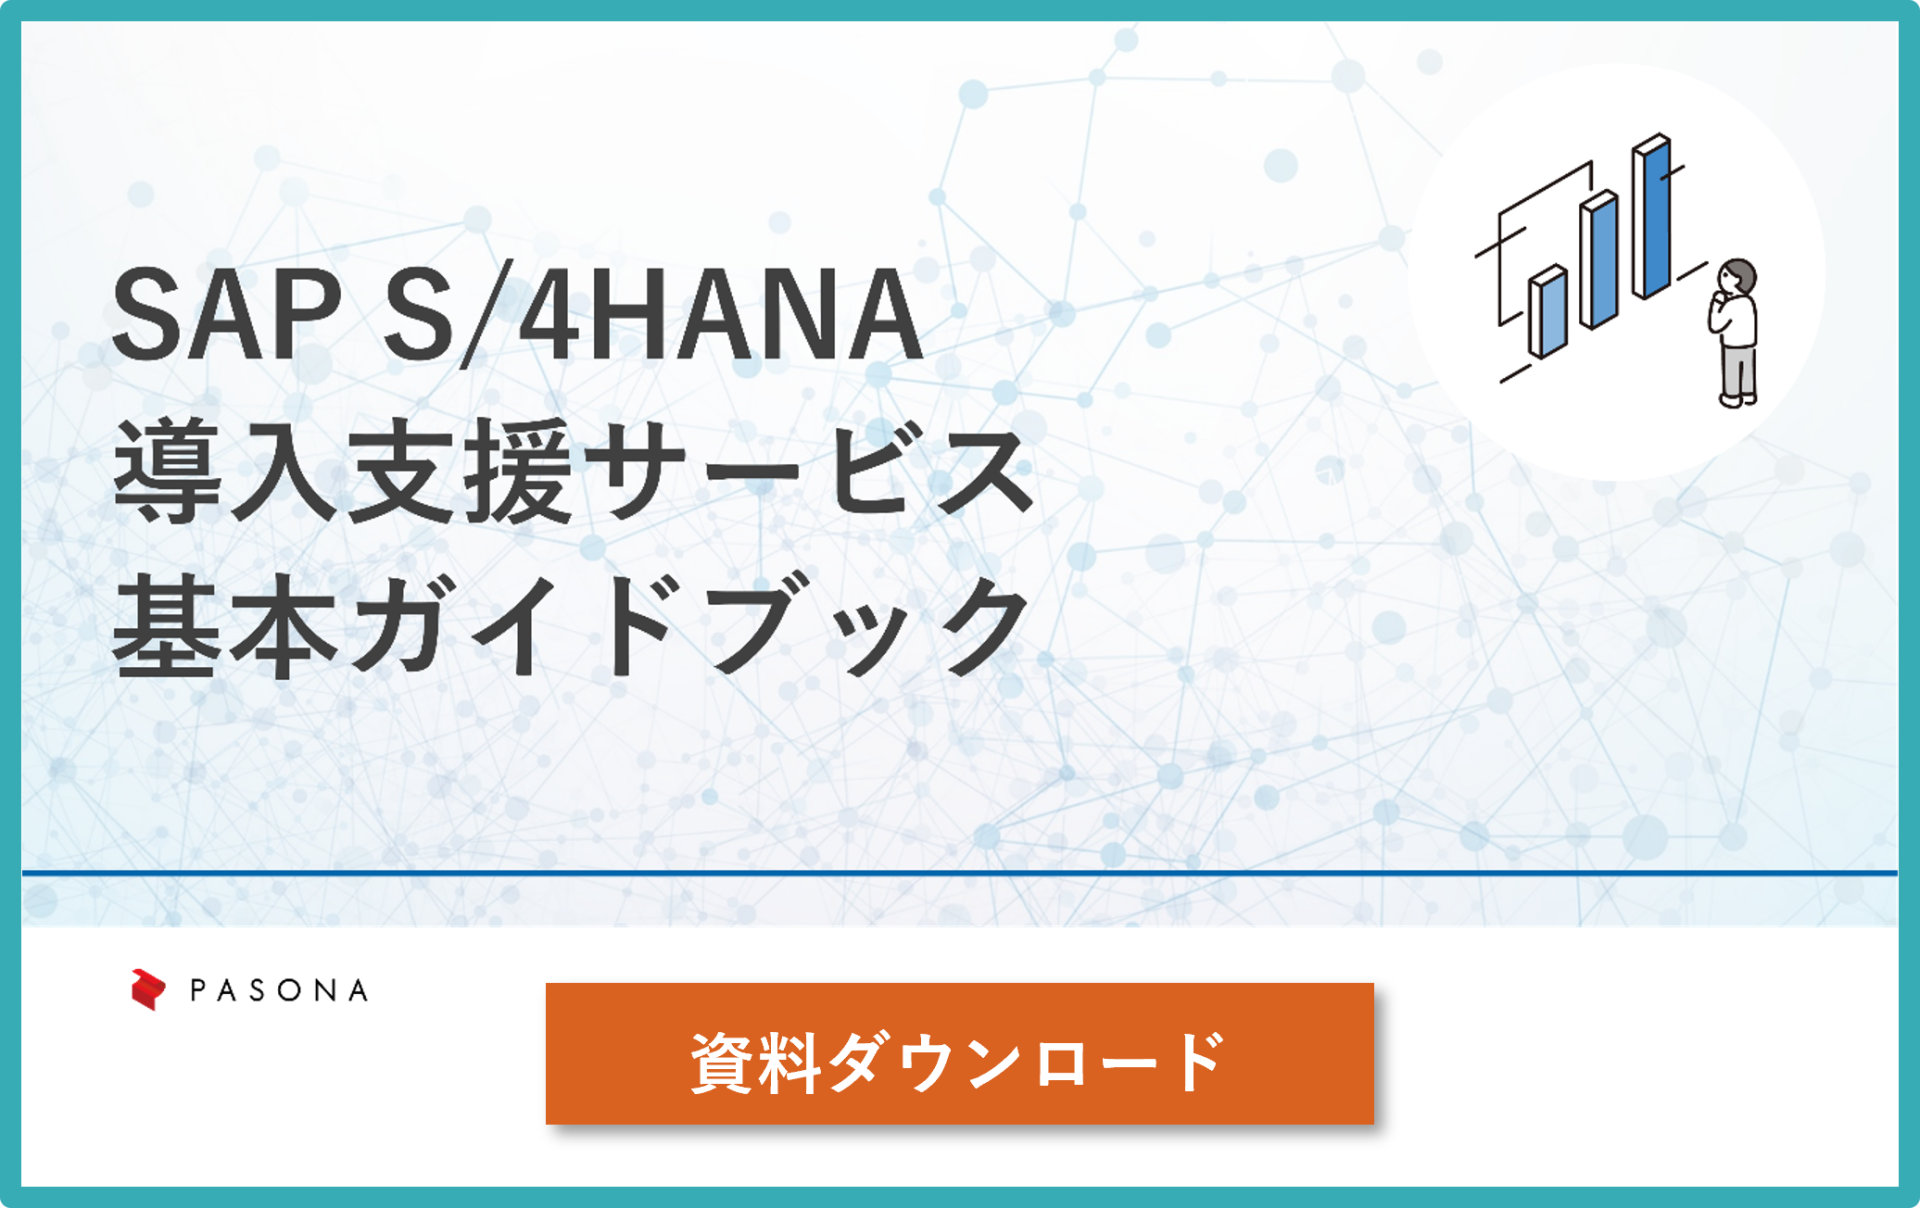 SAP S/4HANA 導入支援サービス 基本ガイドブック